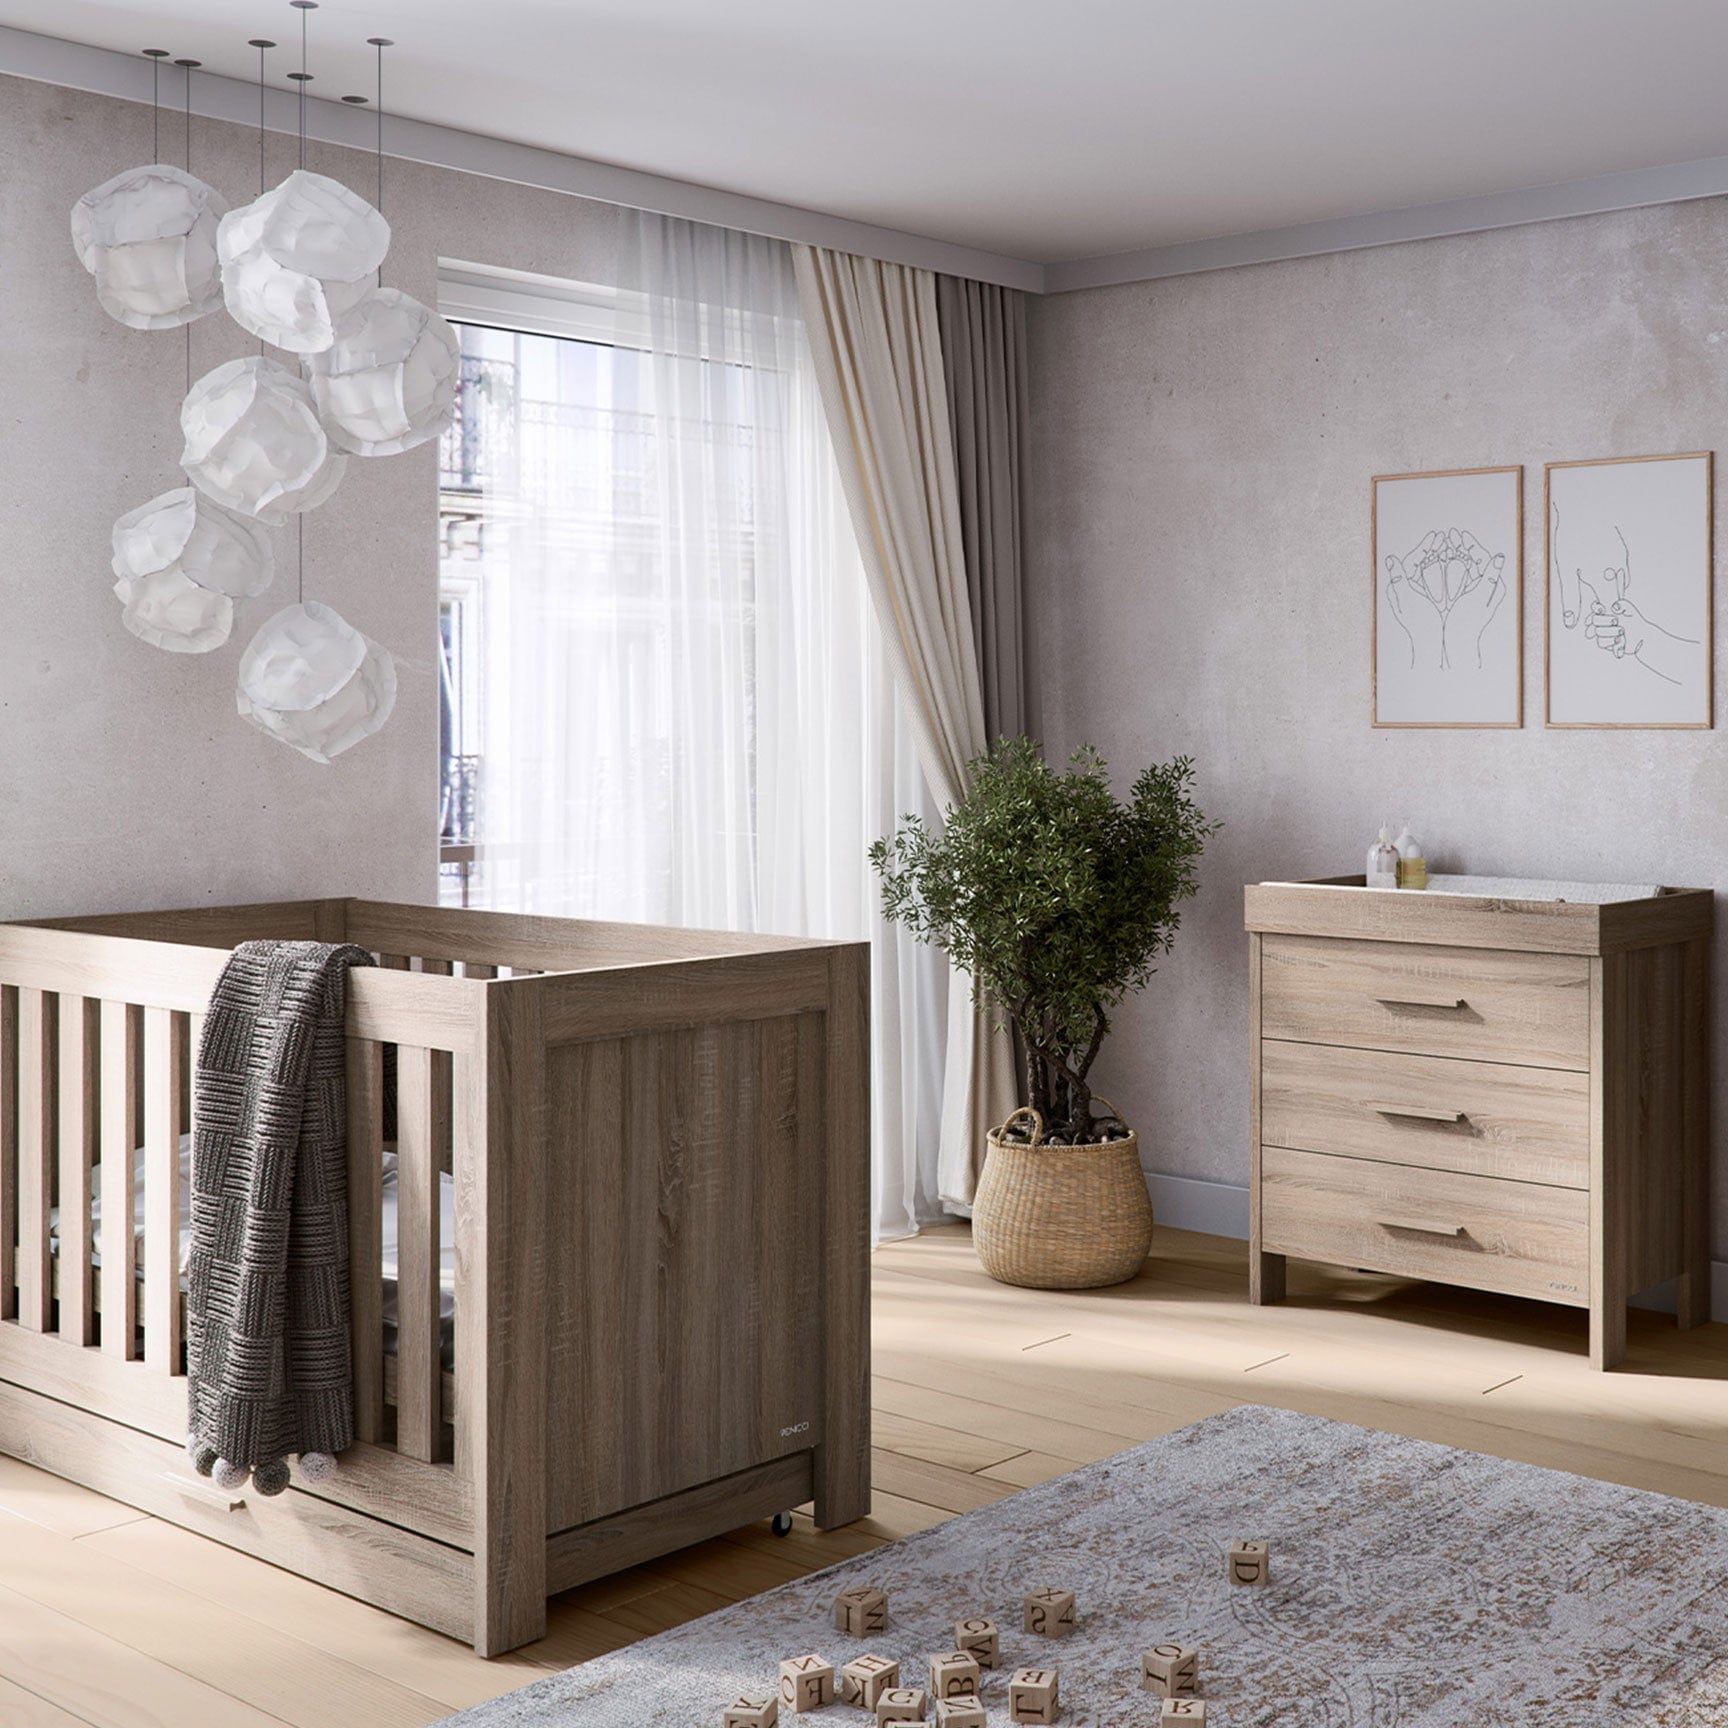 Venicci Forenzo 2 Piece Dresser Roomset - Truffle Oak Nursery Room Sets